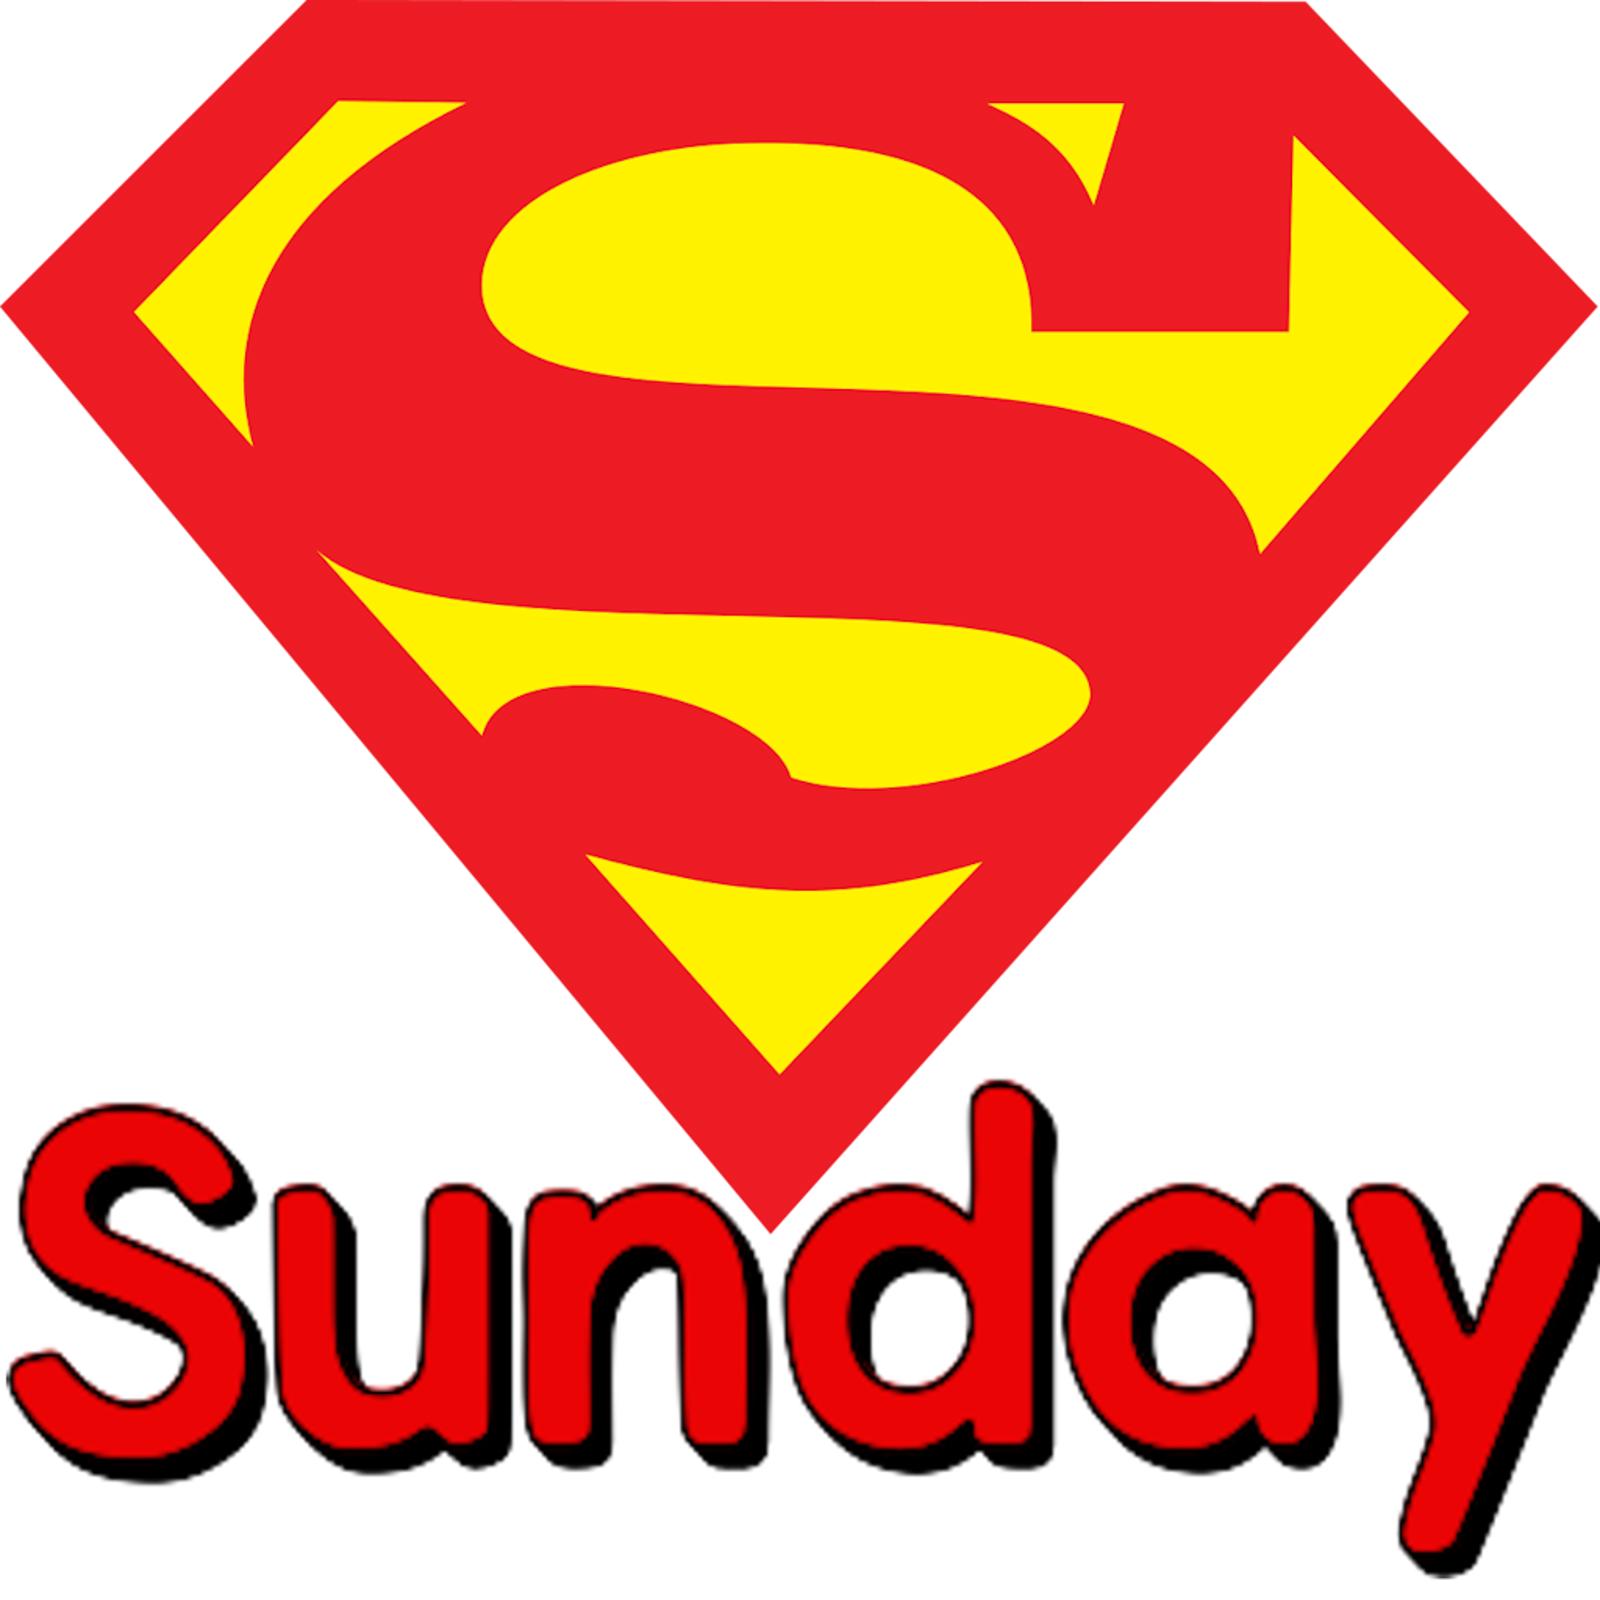 Super Sunday!